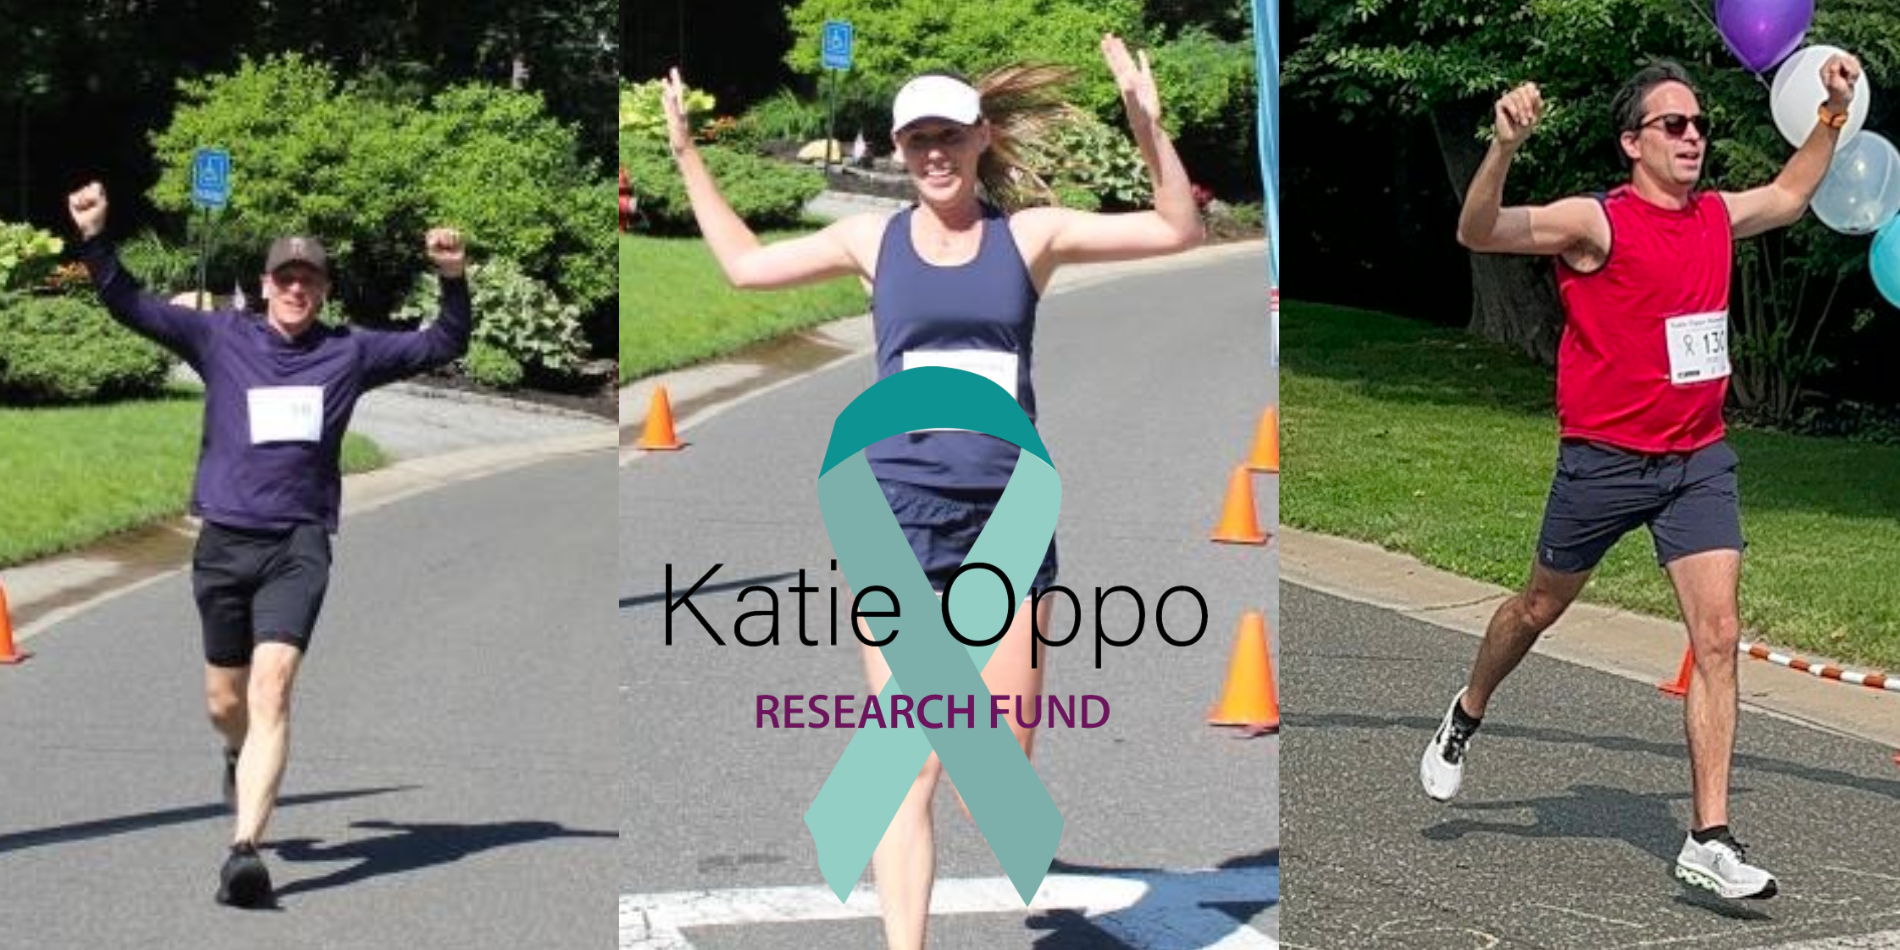 Katie Oppo Memorial 5K Run/Walk promotional image